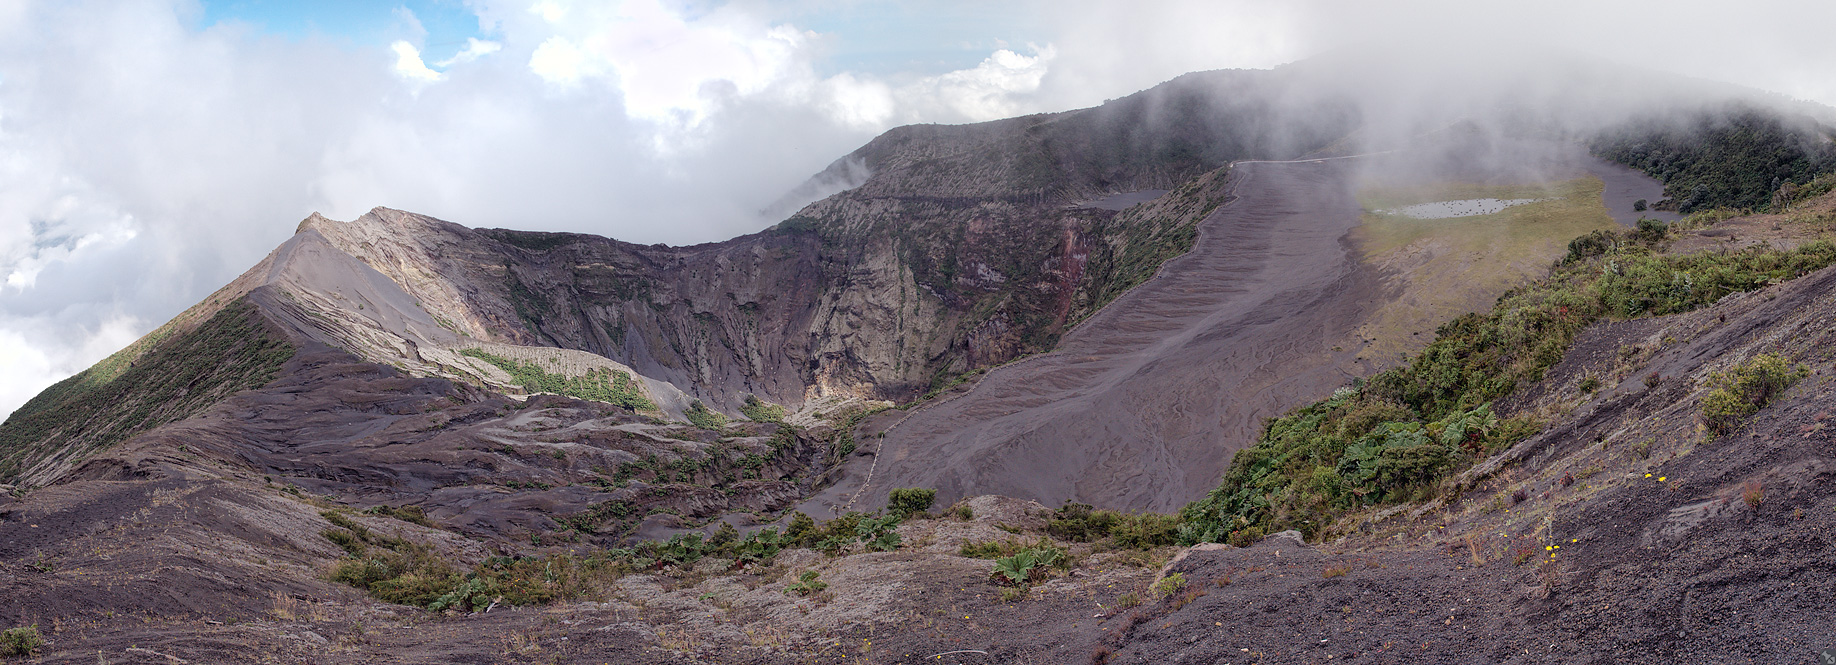 Volcán Irazú, 09:46 Uhr morgens